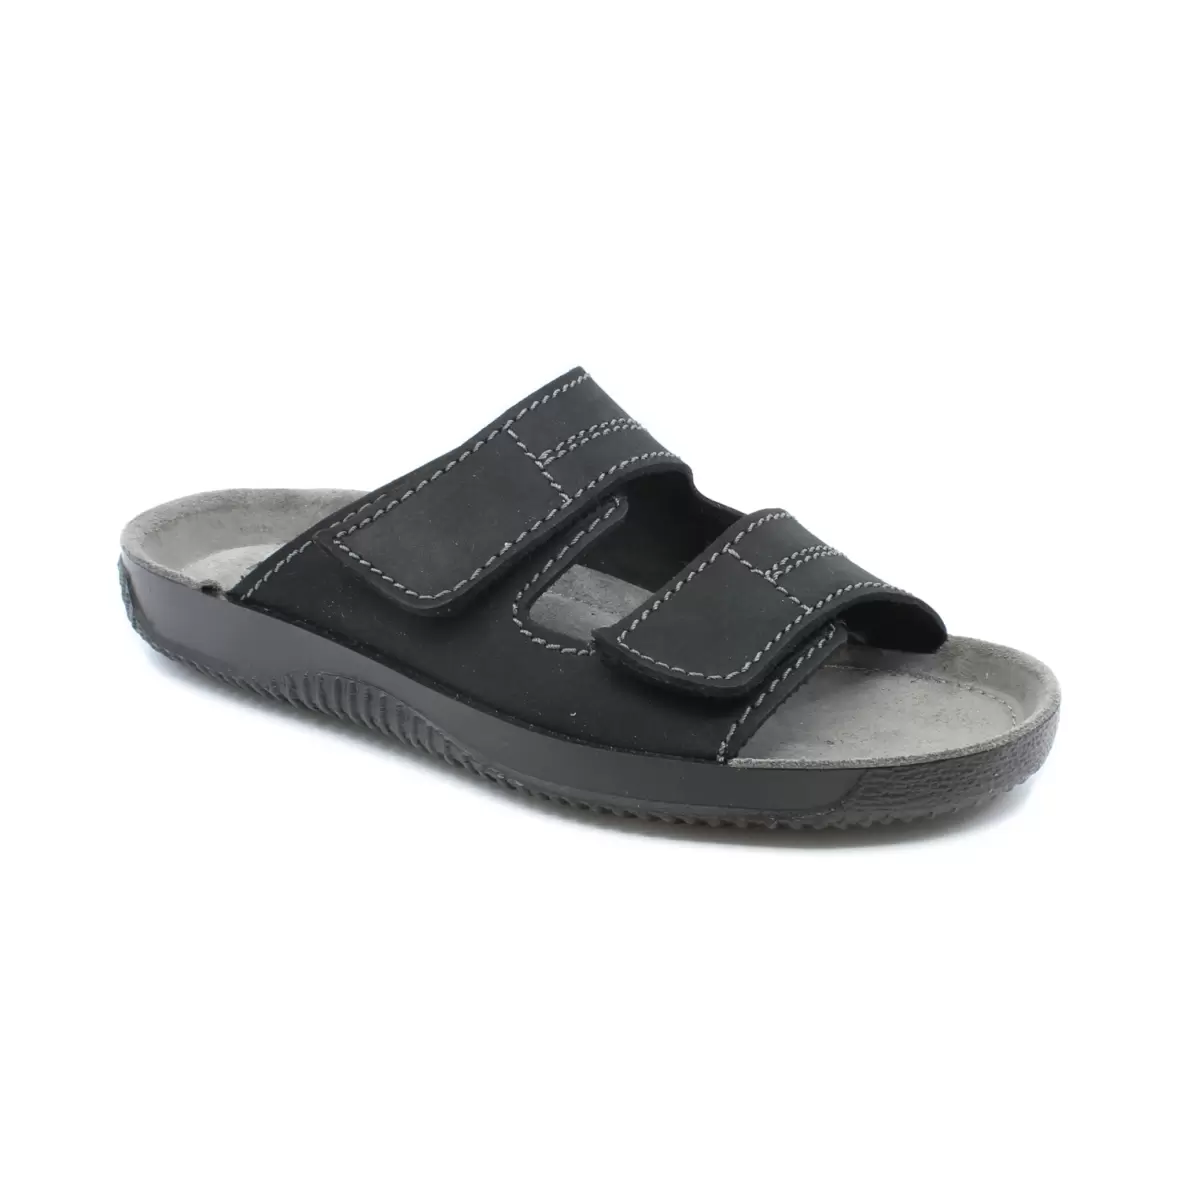 Rohde slippers/sandal